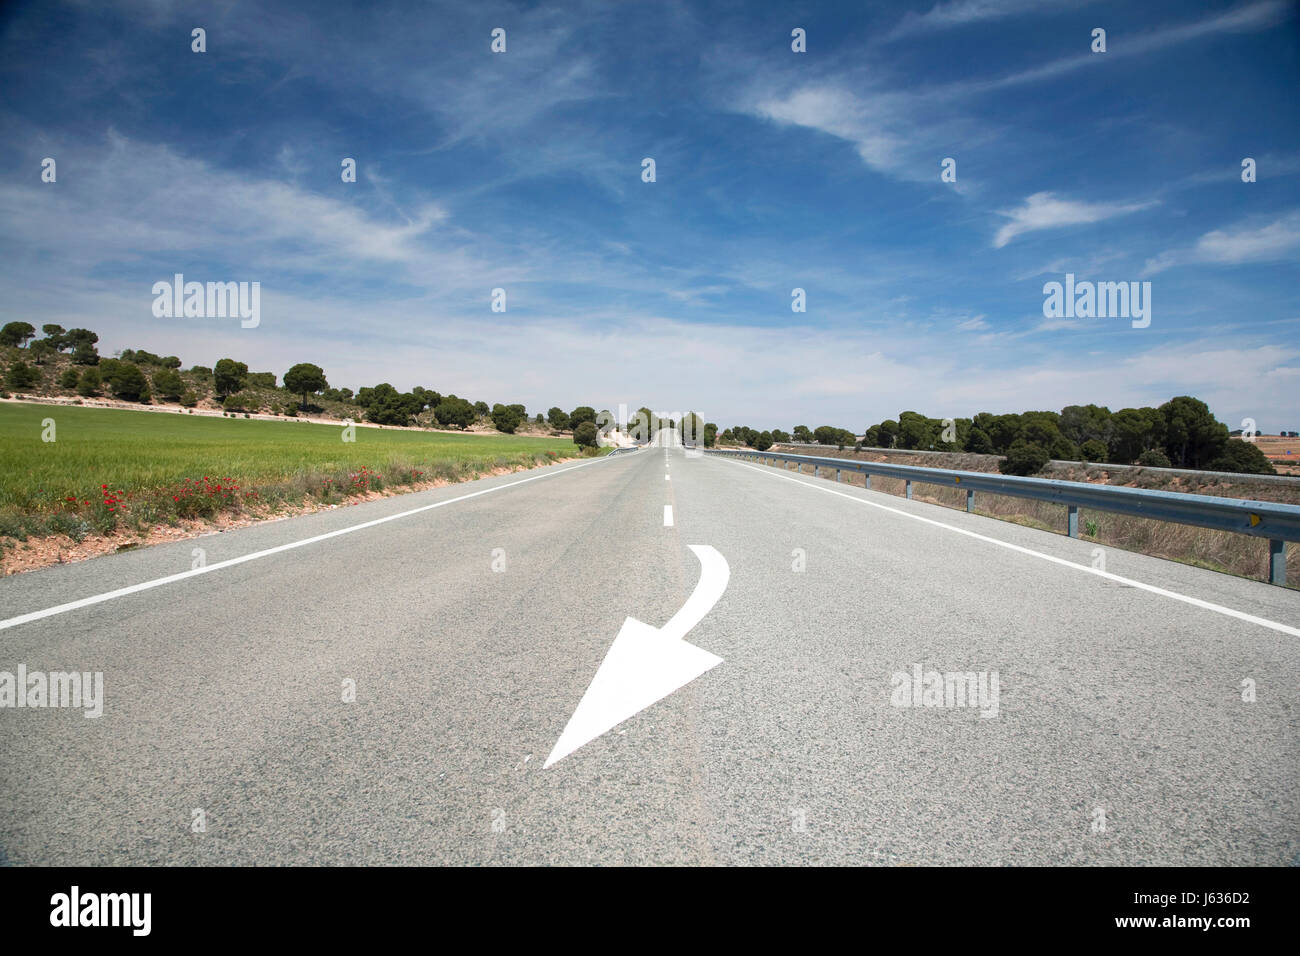 sign signal asphalt motorway highway right claim arrow overtake road street Stock Photo